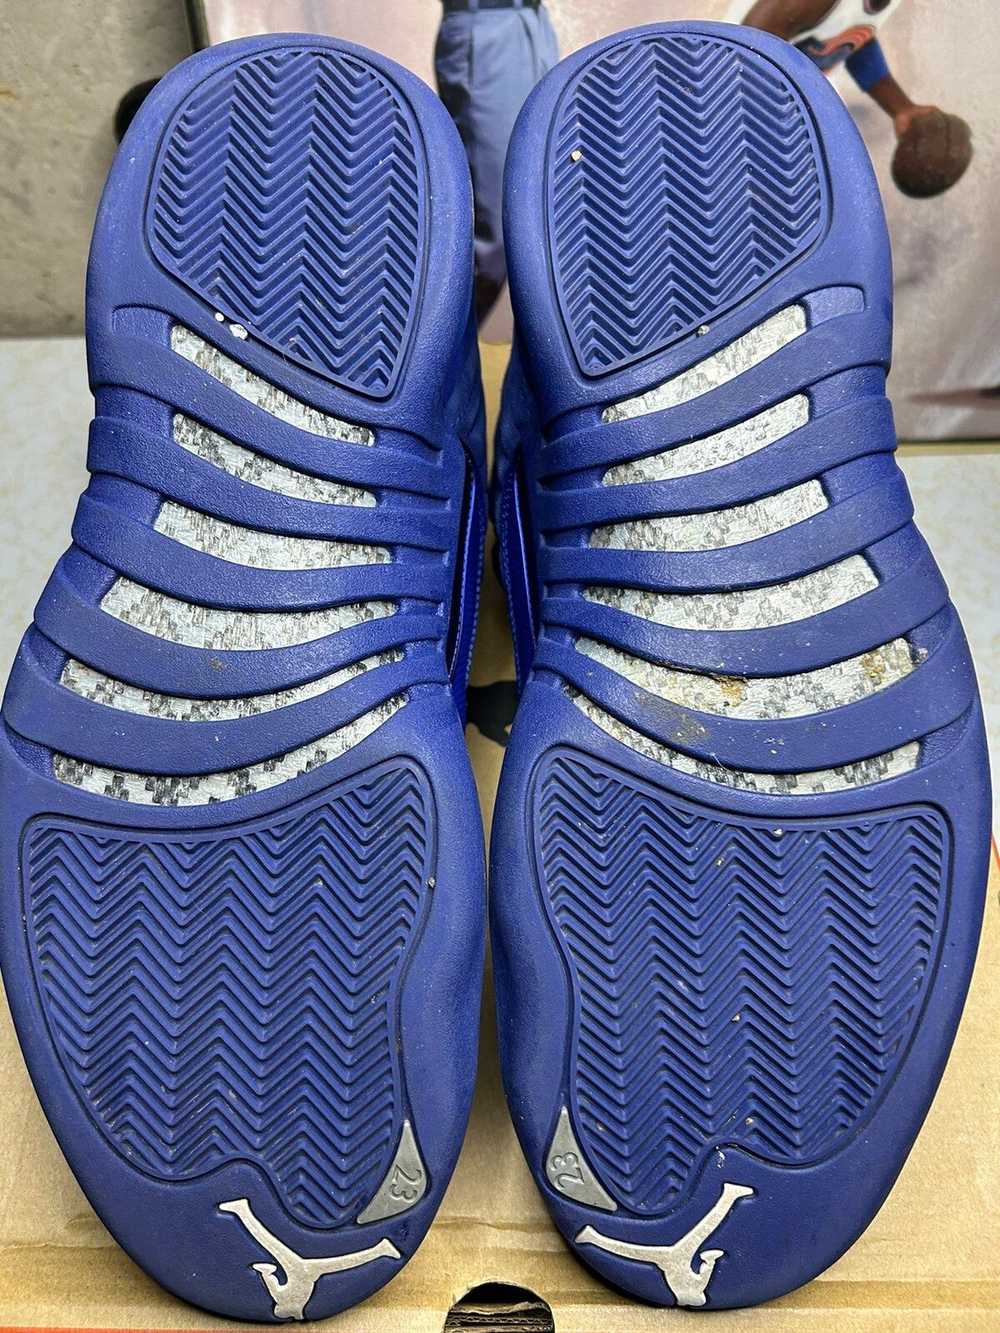 Jordan Brand Jordan Retro 12 ‘royal blue’ - image 4